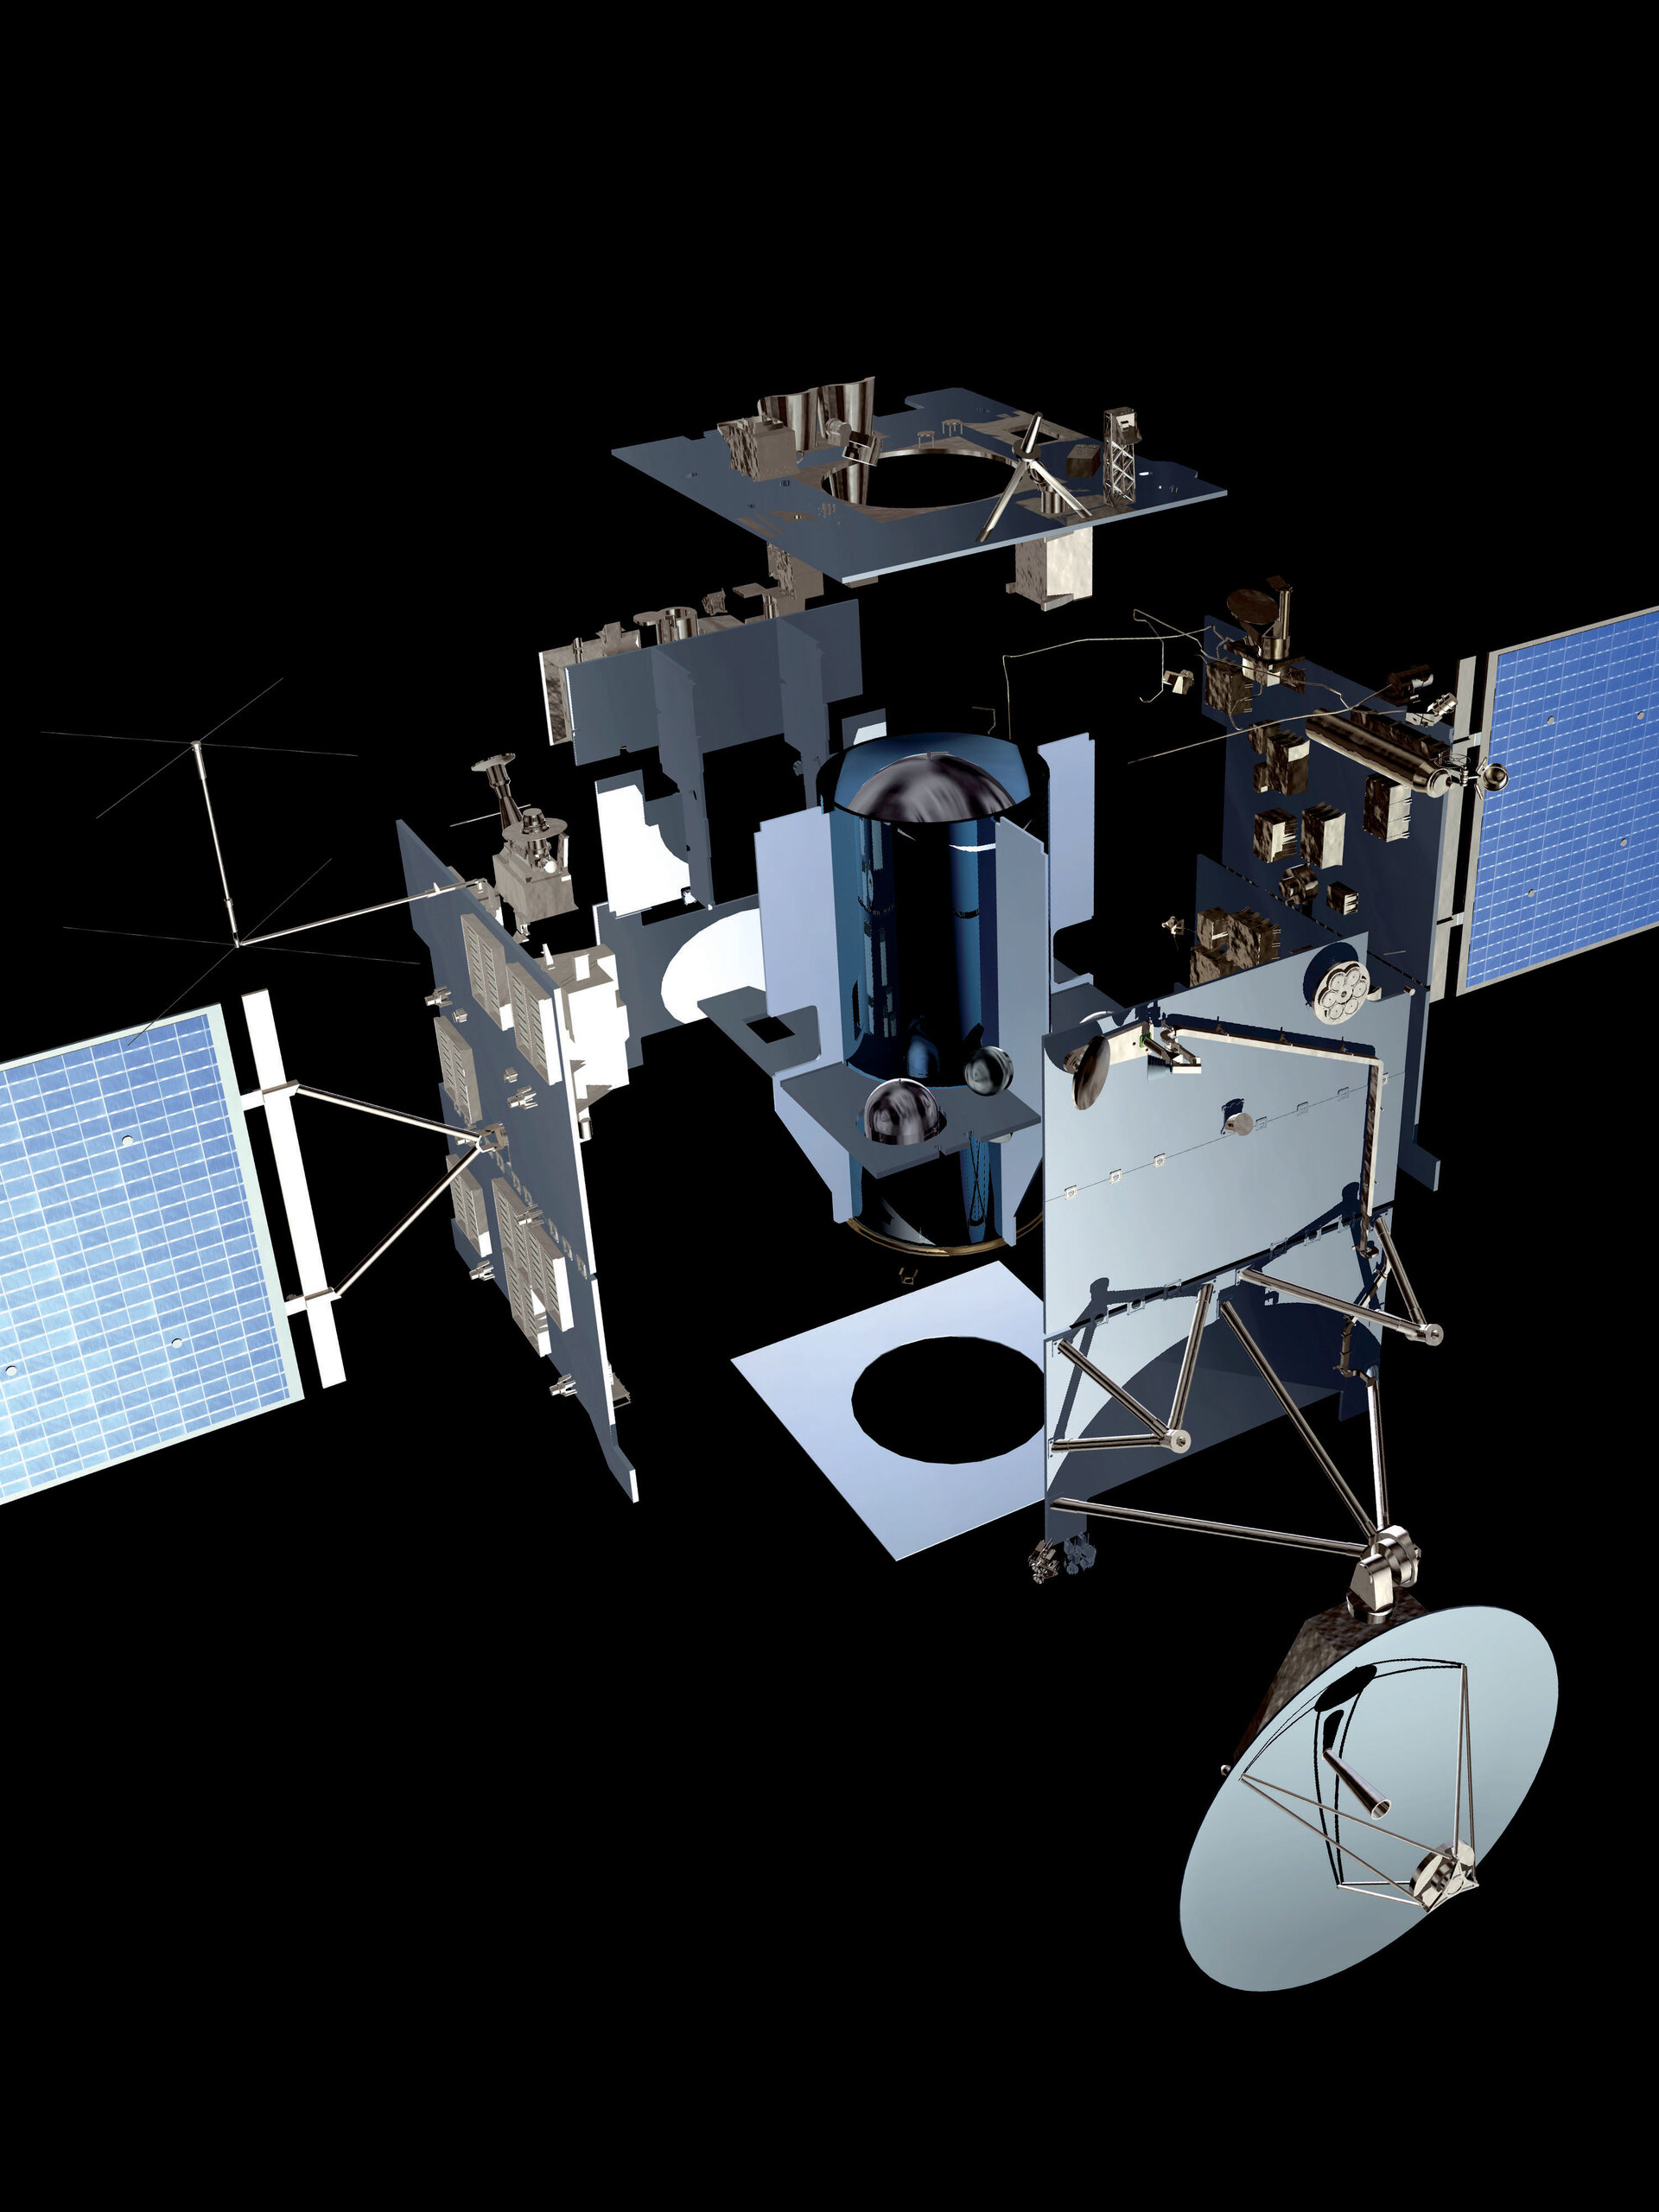 La sonde cométaire Rosetta